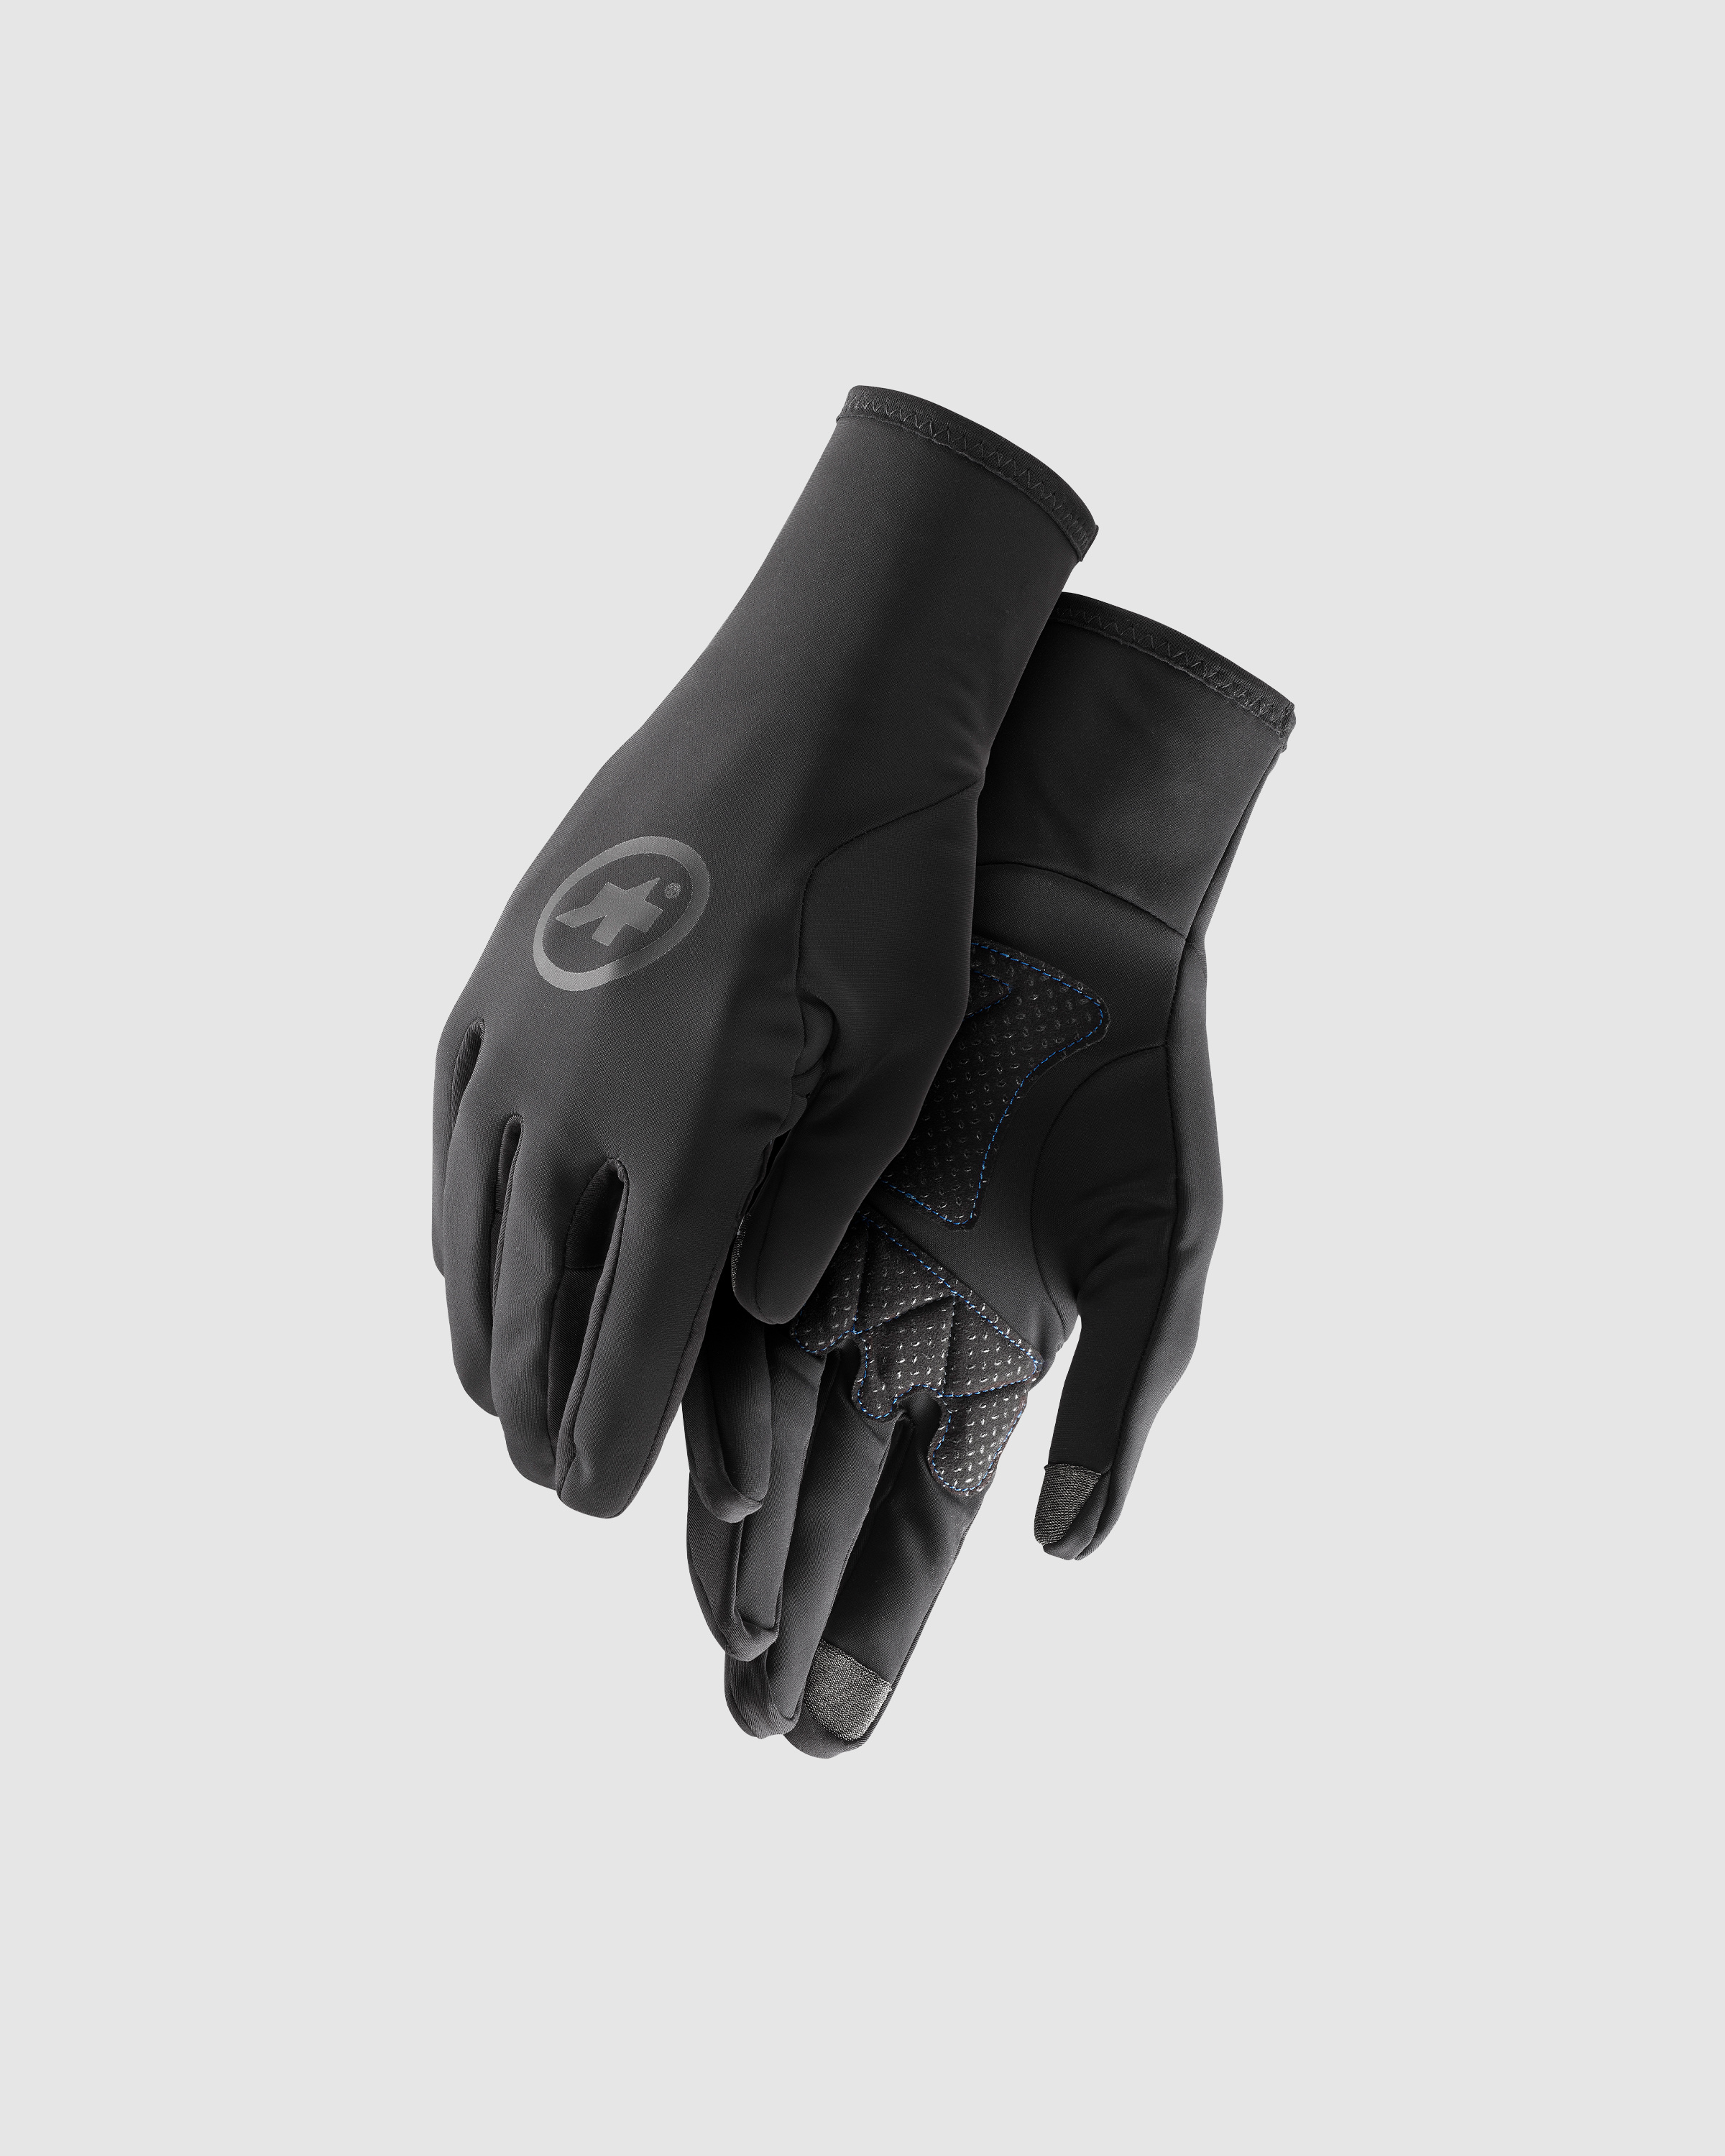 Winter Gloves EVO, blackSeries » ASSOS Of Switzerland